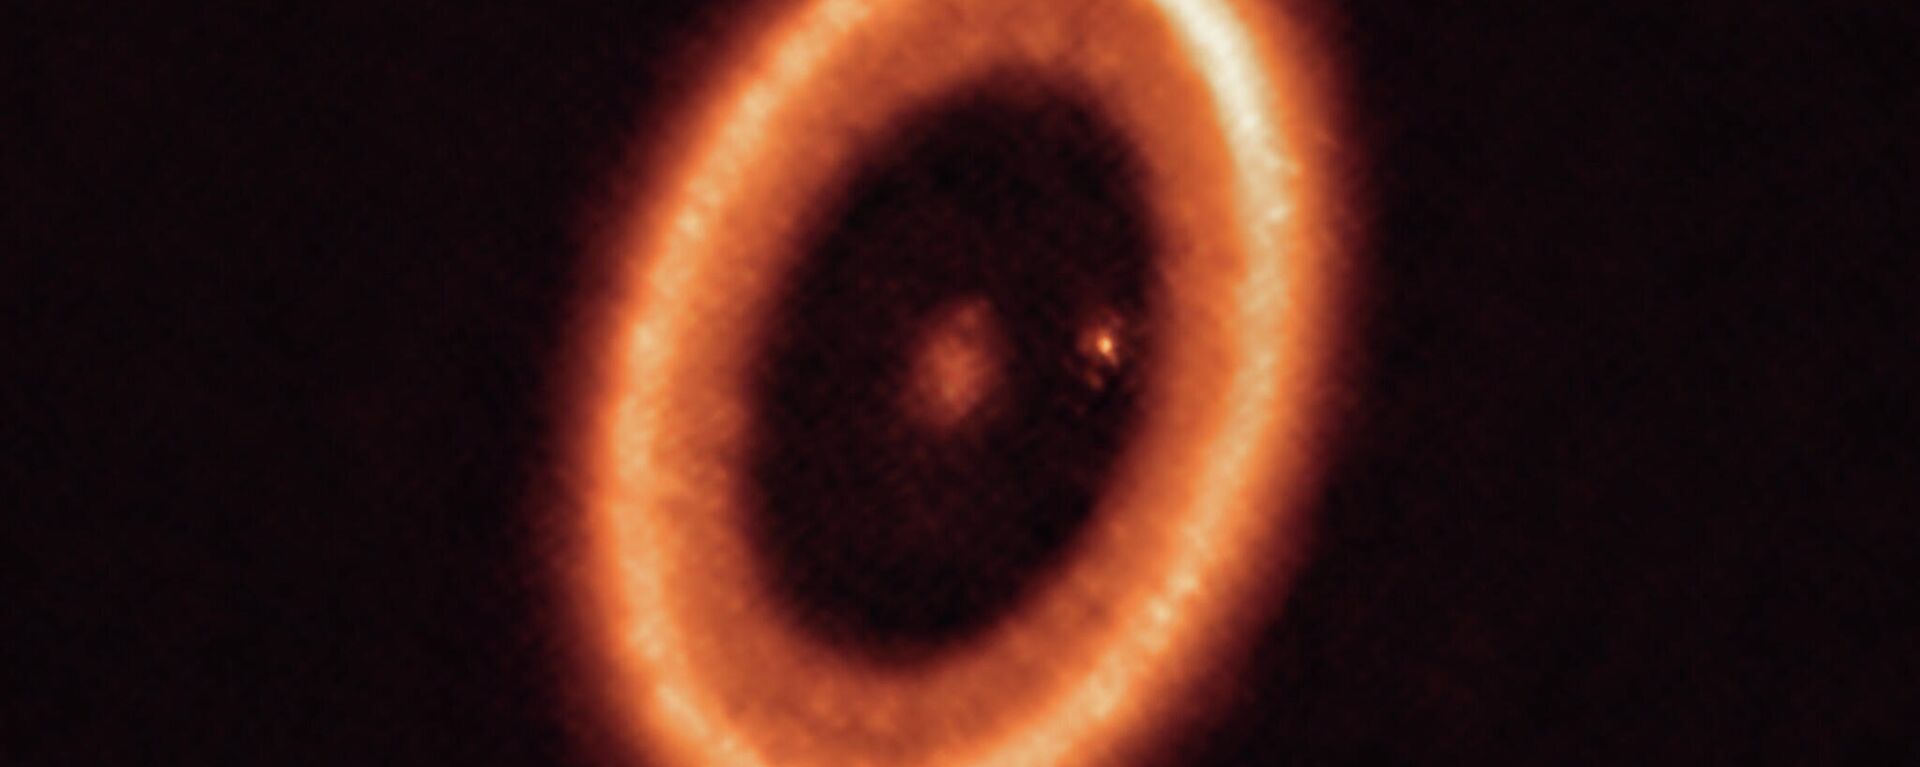 Detectan por primera vez un disco que crea lunas alrededor de un exoplaneta - Sputnik Mundo, 1920, 23.07.2021